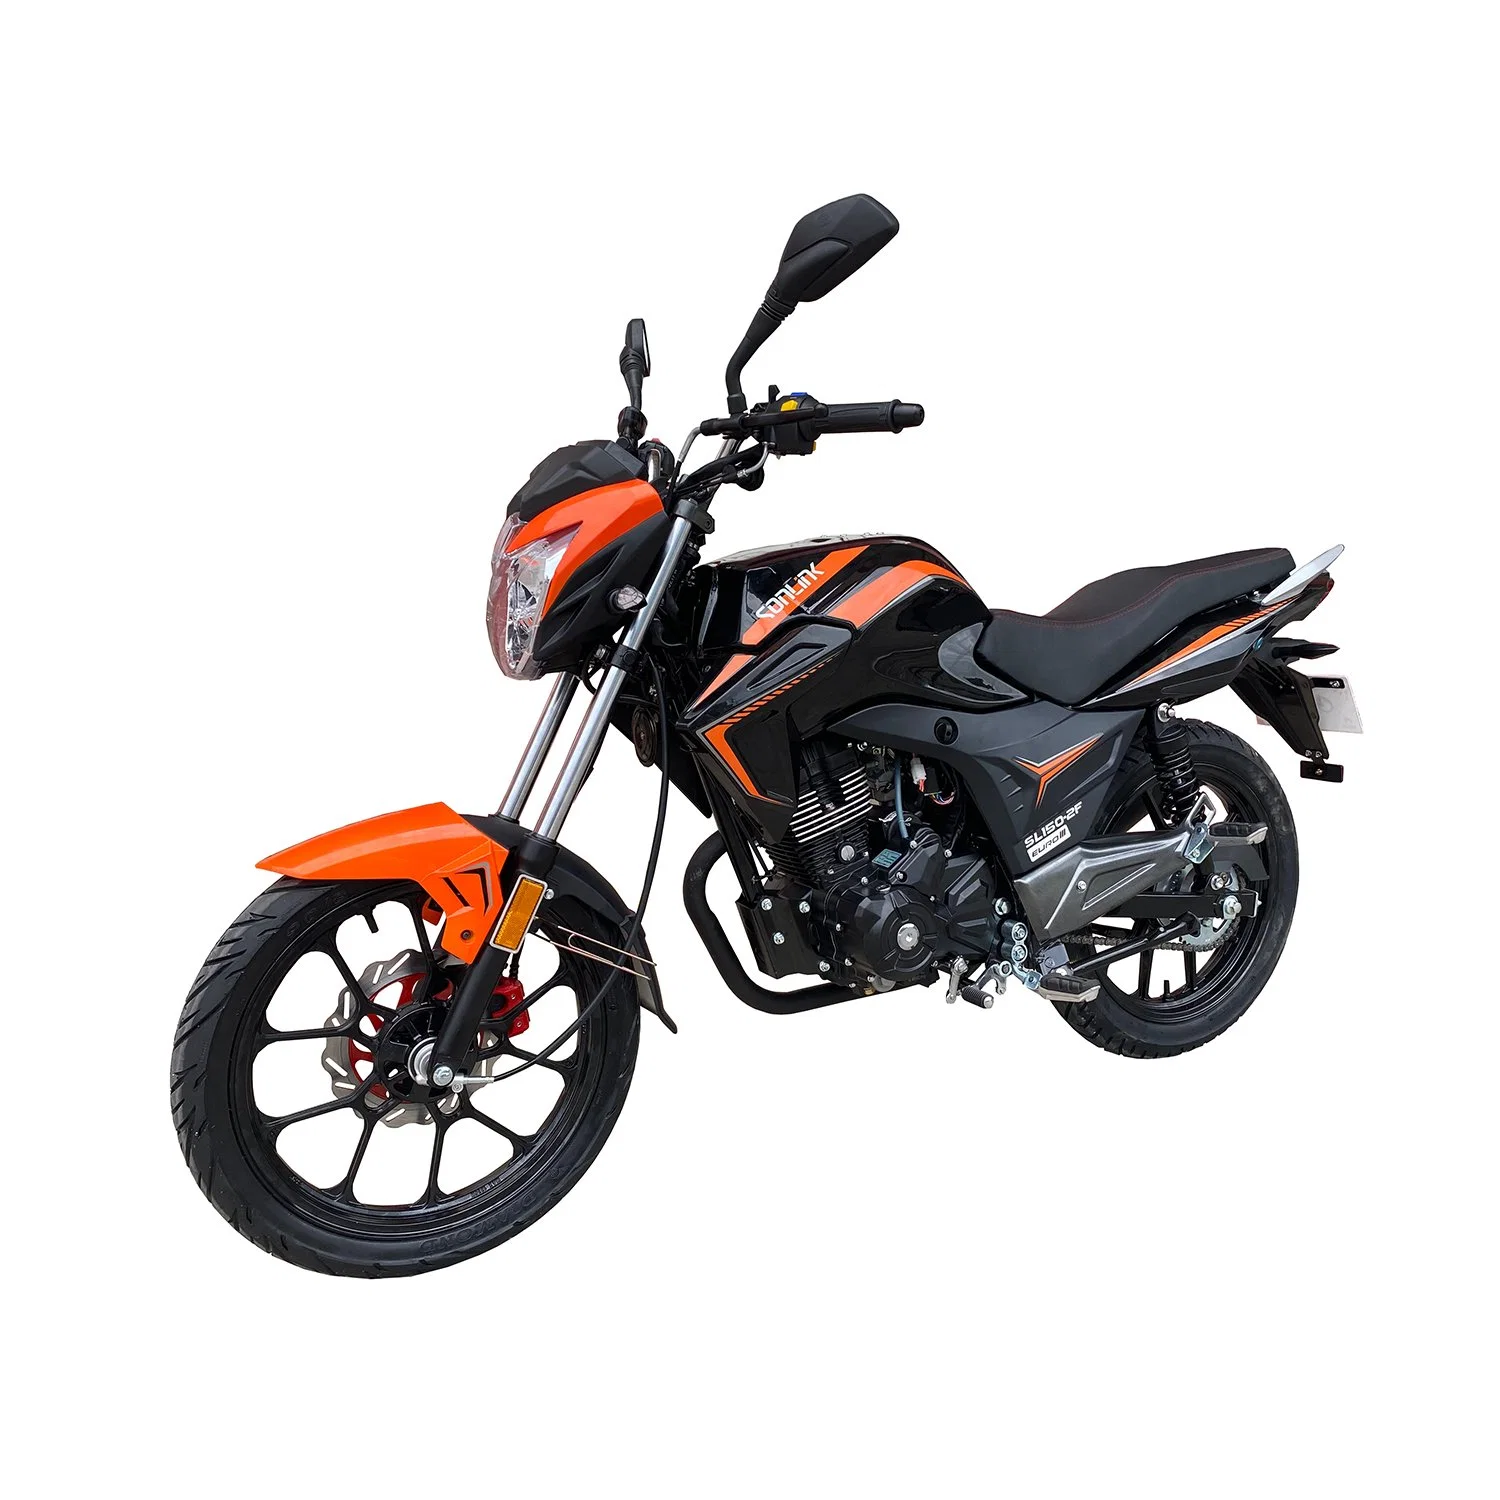 El deporte / motocicleta 150 cc moto / scooter de 150cc / scooter de 125 cc / 100cc Motocicleta / Dirt Bike 125 cc